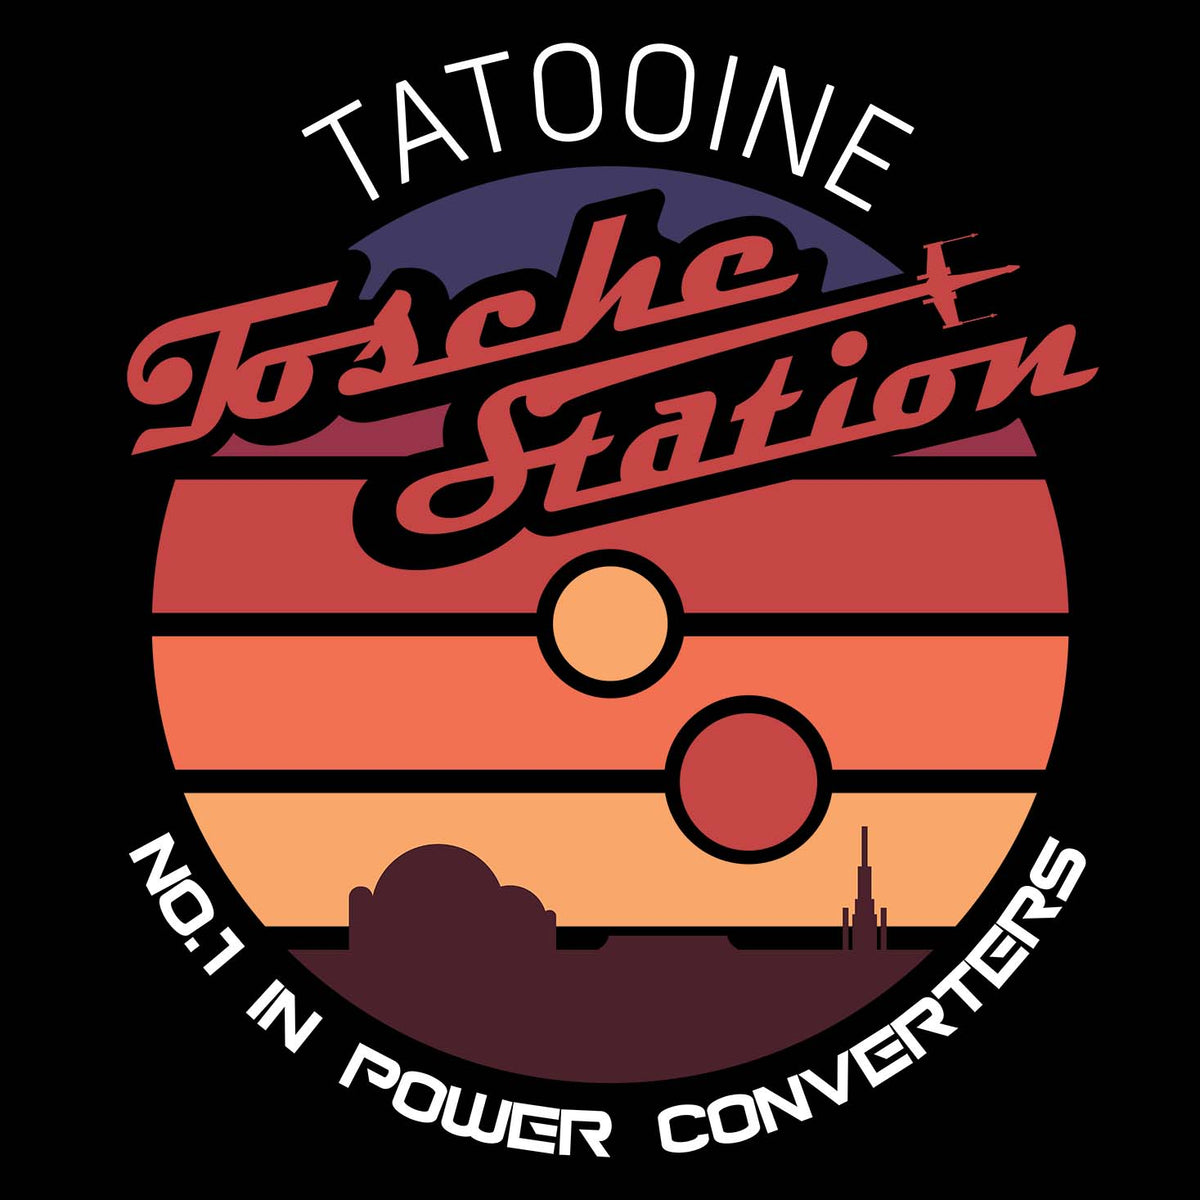 Tatooine Tosche Station tee